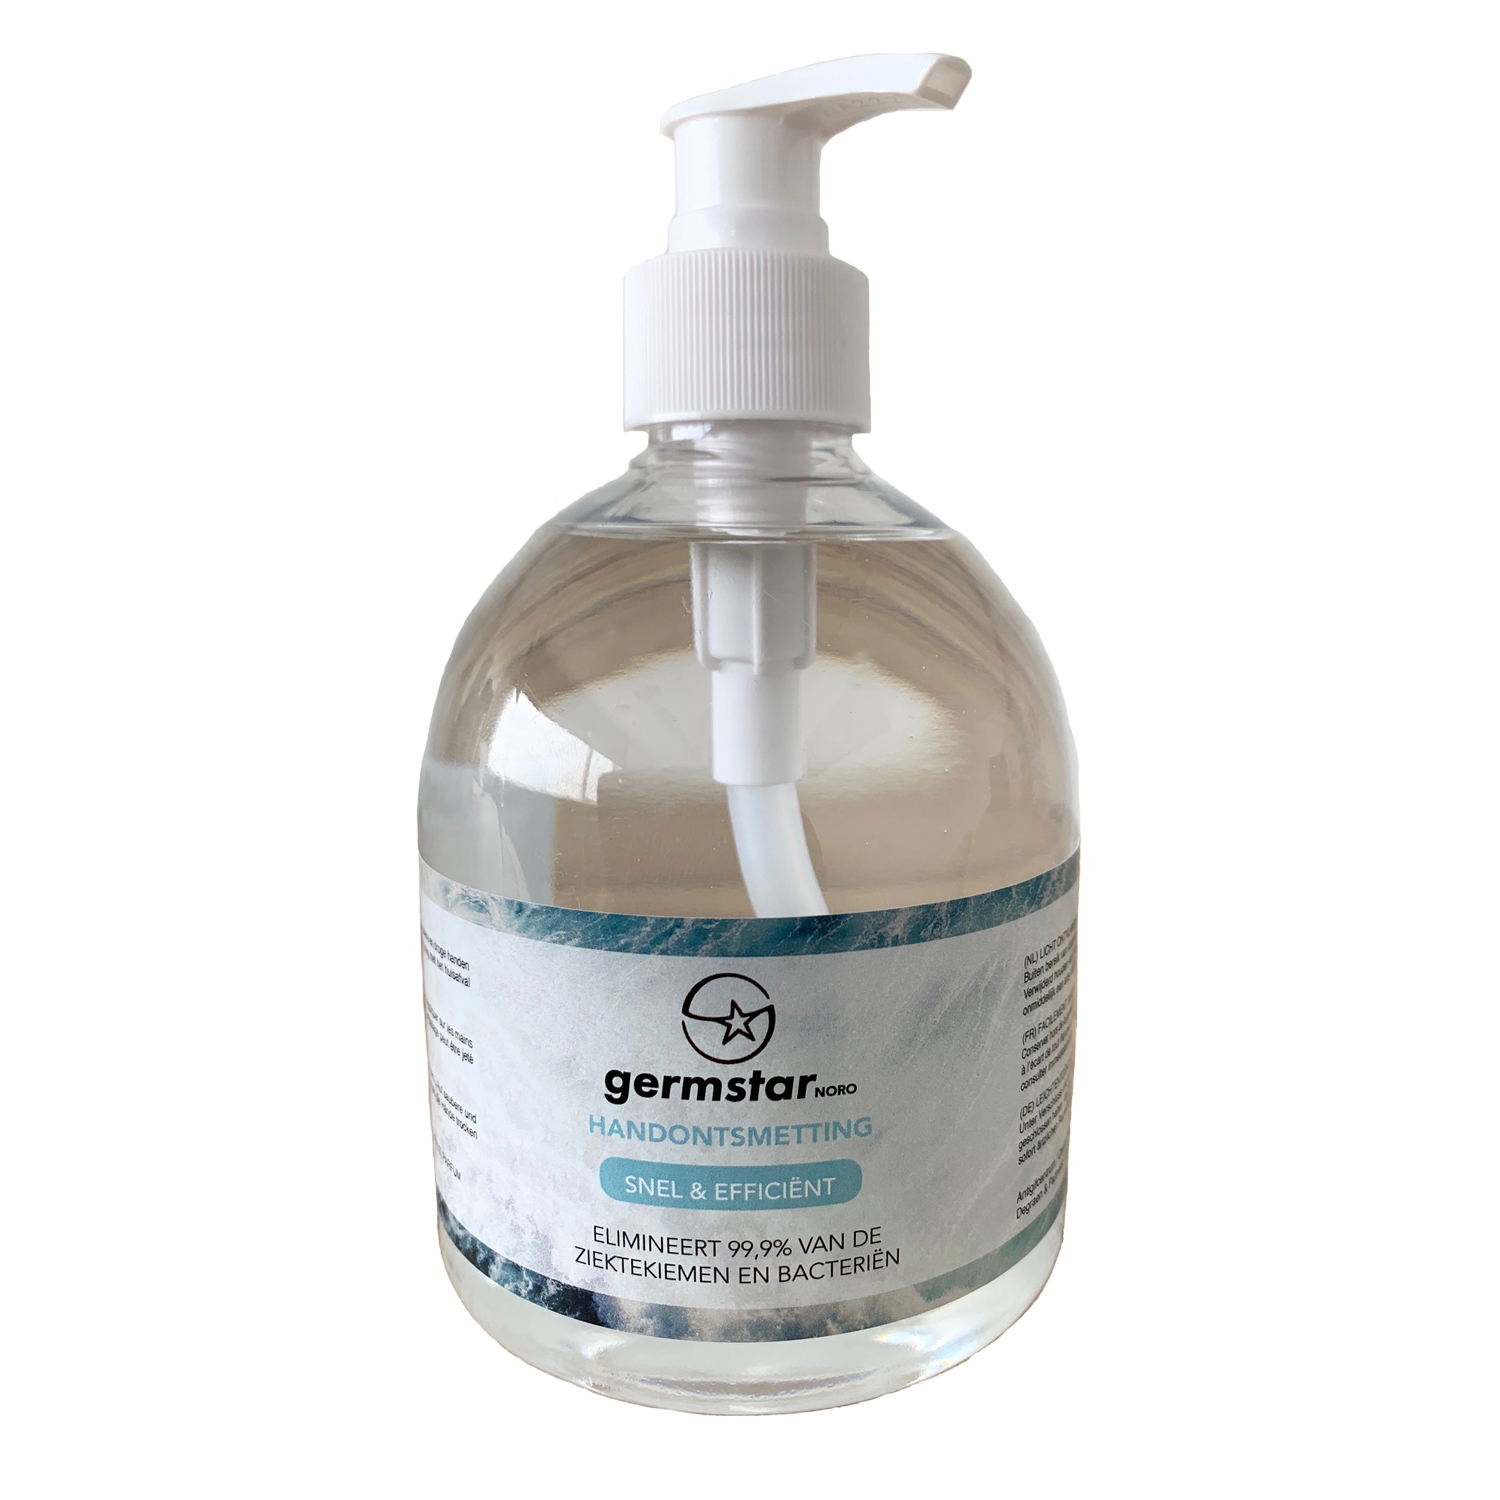 Germstar handontsmetting 70% - pompfles - 500 ml